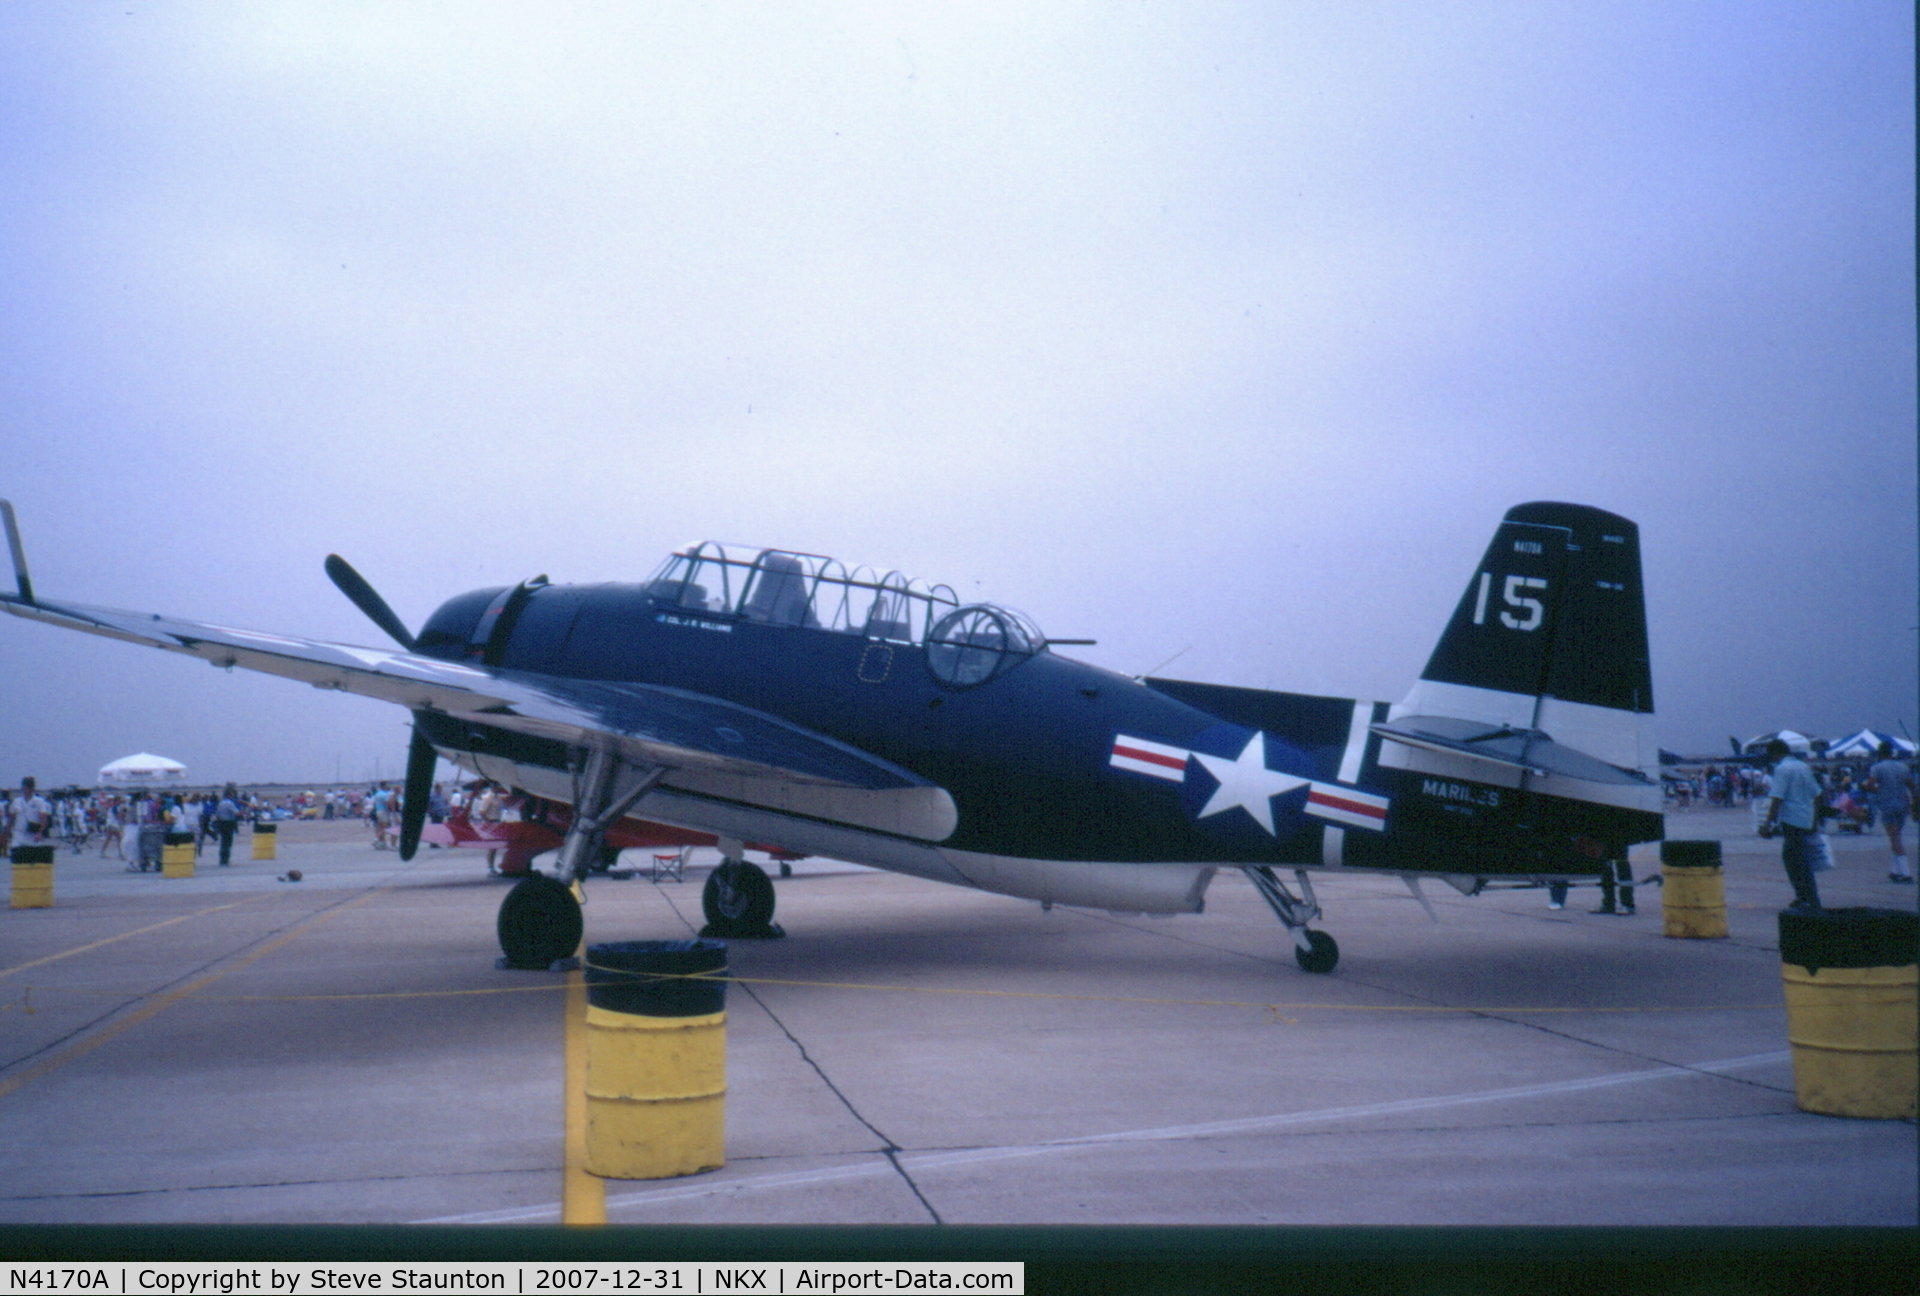 N4170A, Grumman TBM-3E Avenger C/N 4358 (Bu91453), Taken at NAS Miramar Airshow in 1988 (scan of a slide) - Unknown Aircraft